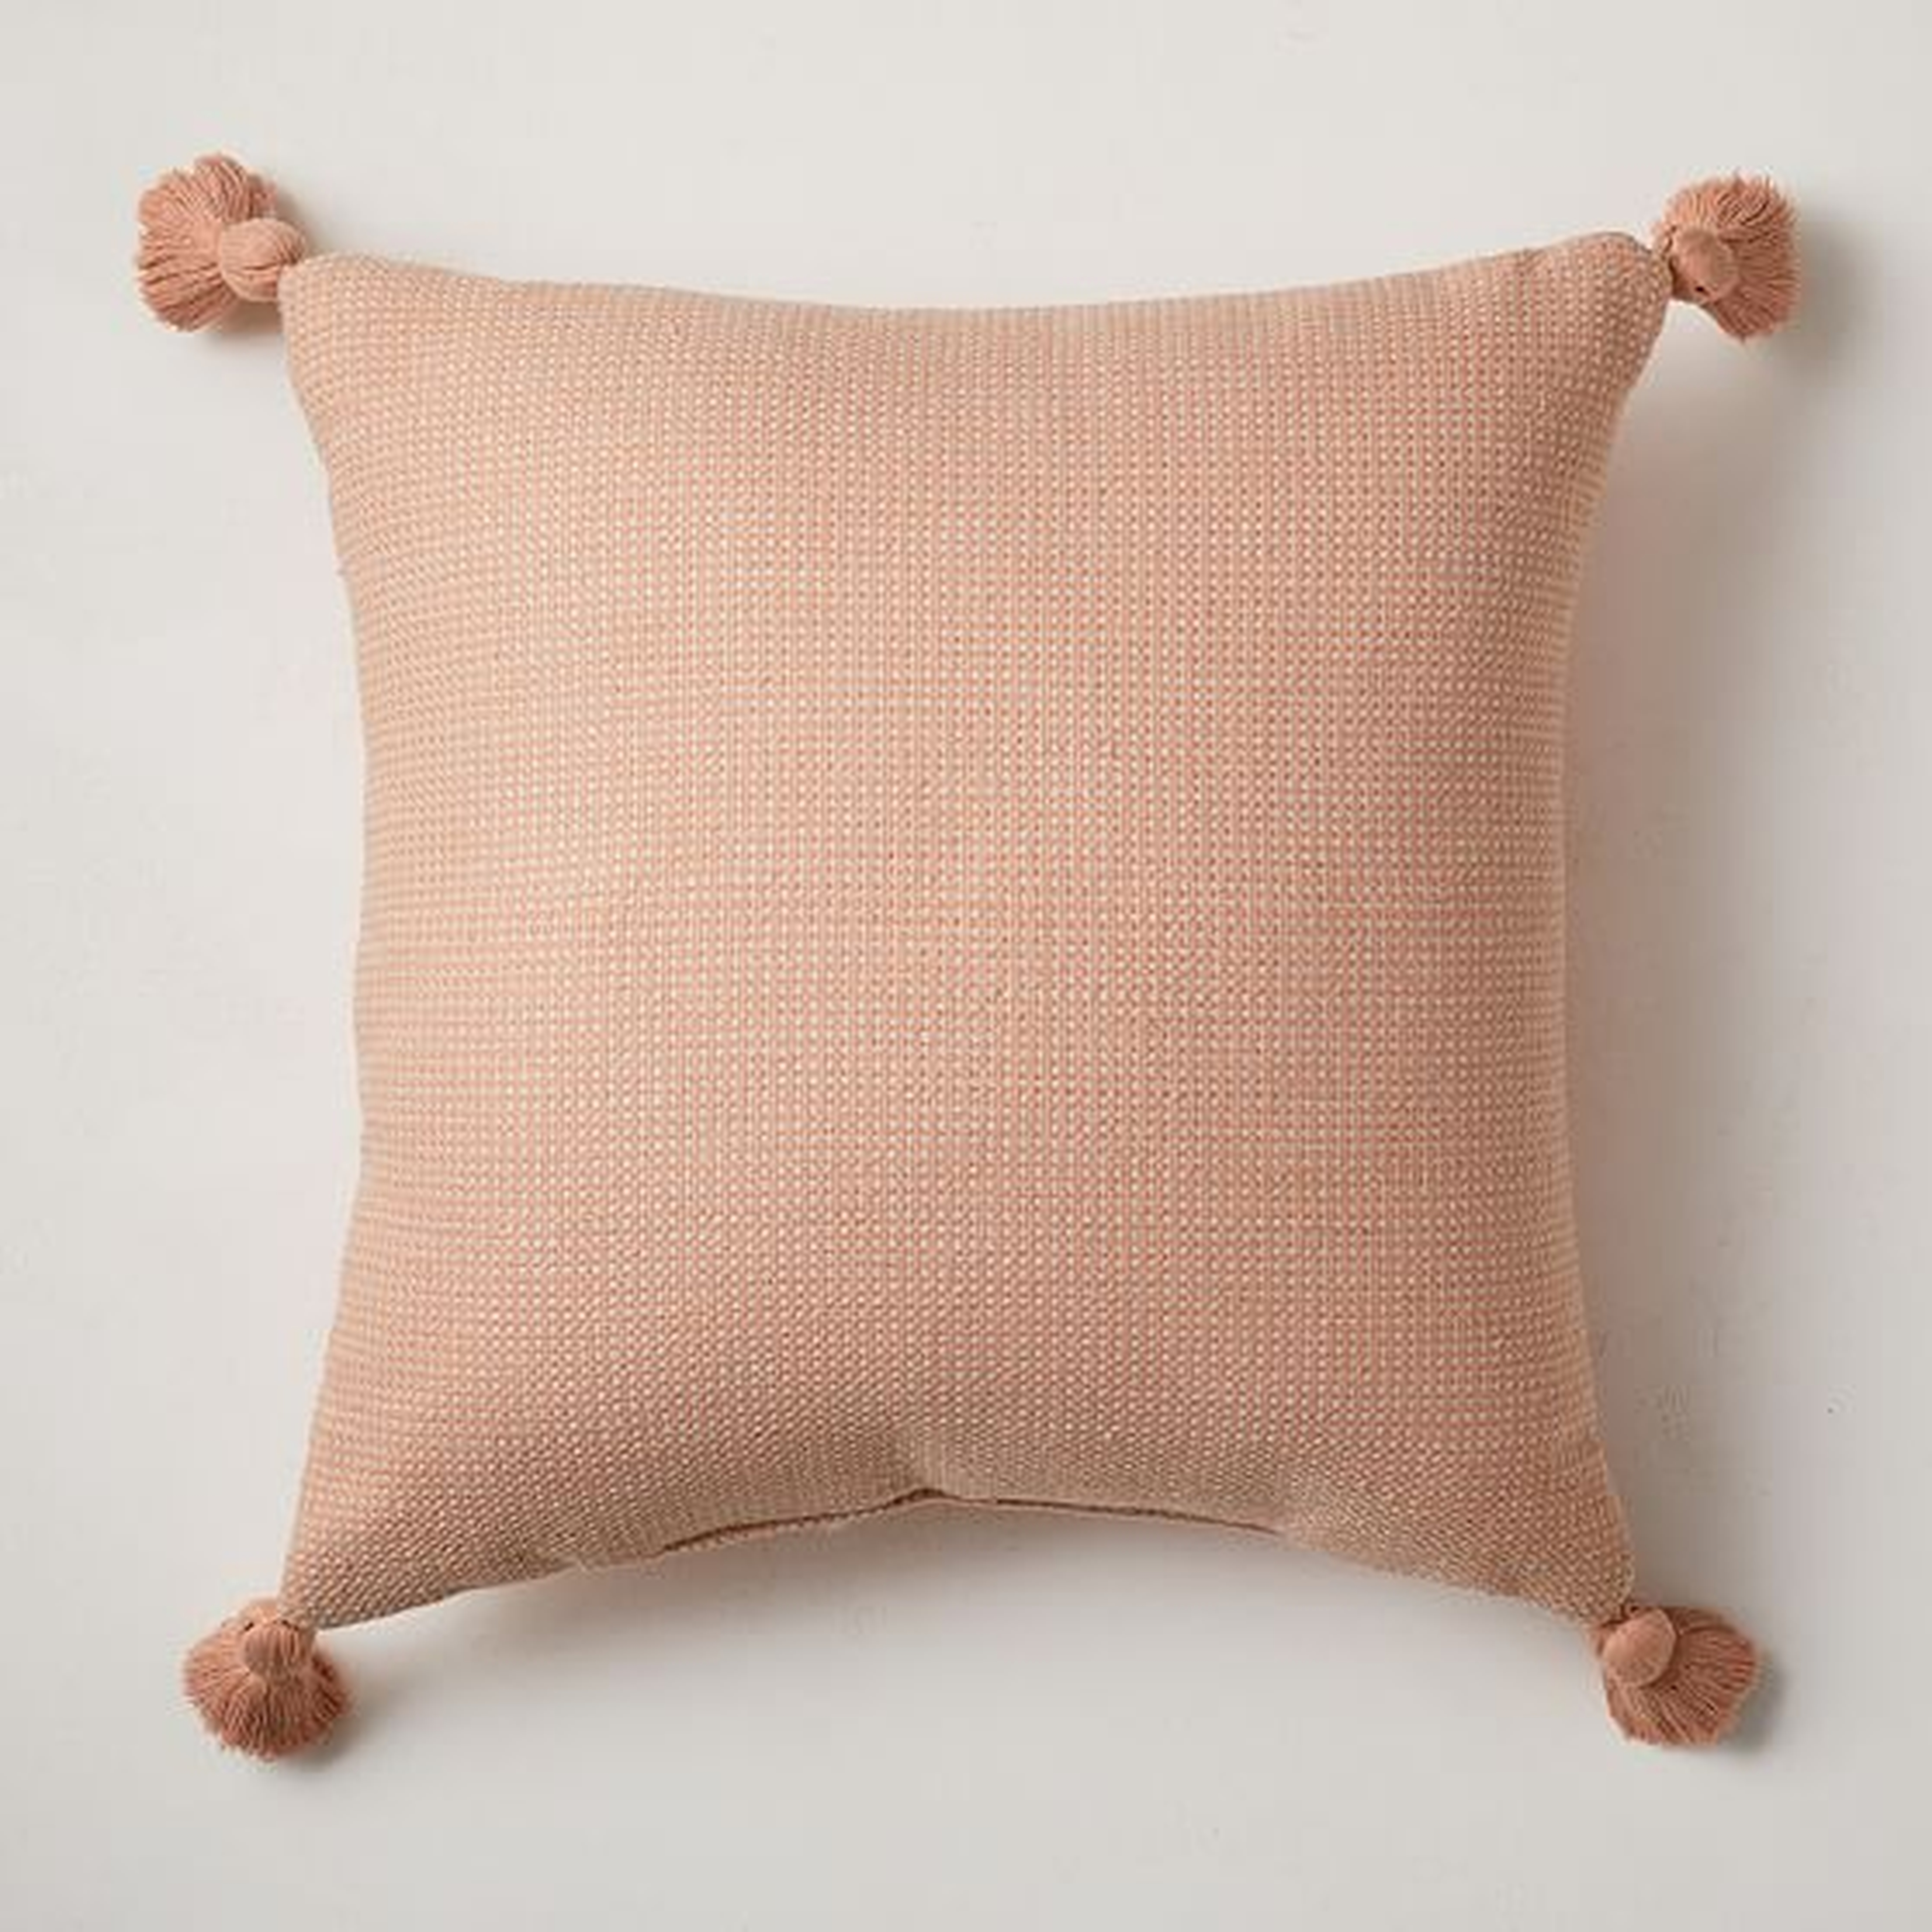 Outdoor Textured Solid Tassel Pillow, 20"x20", Bright Peach - West Elm